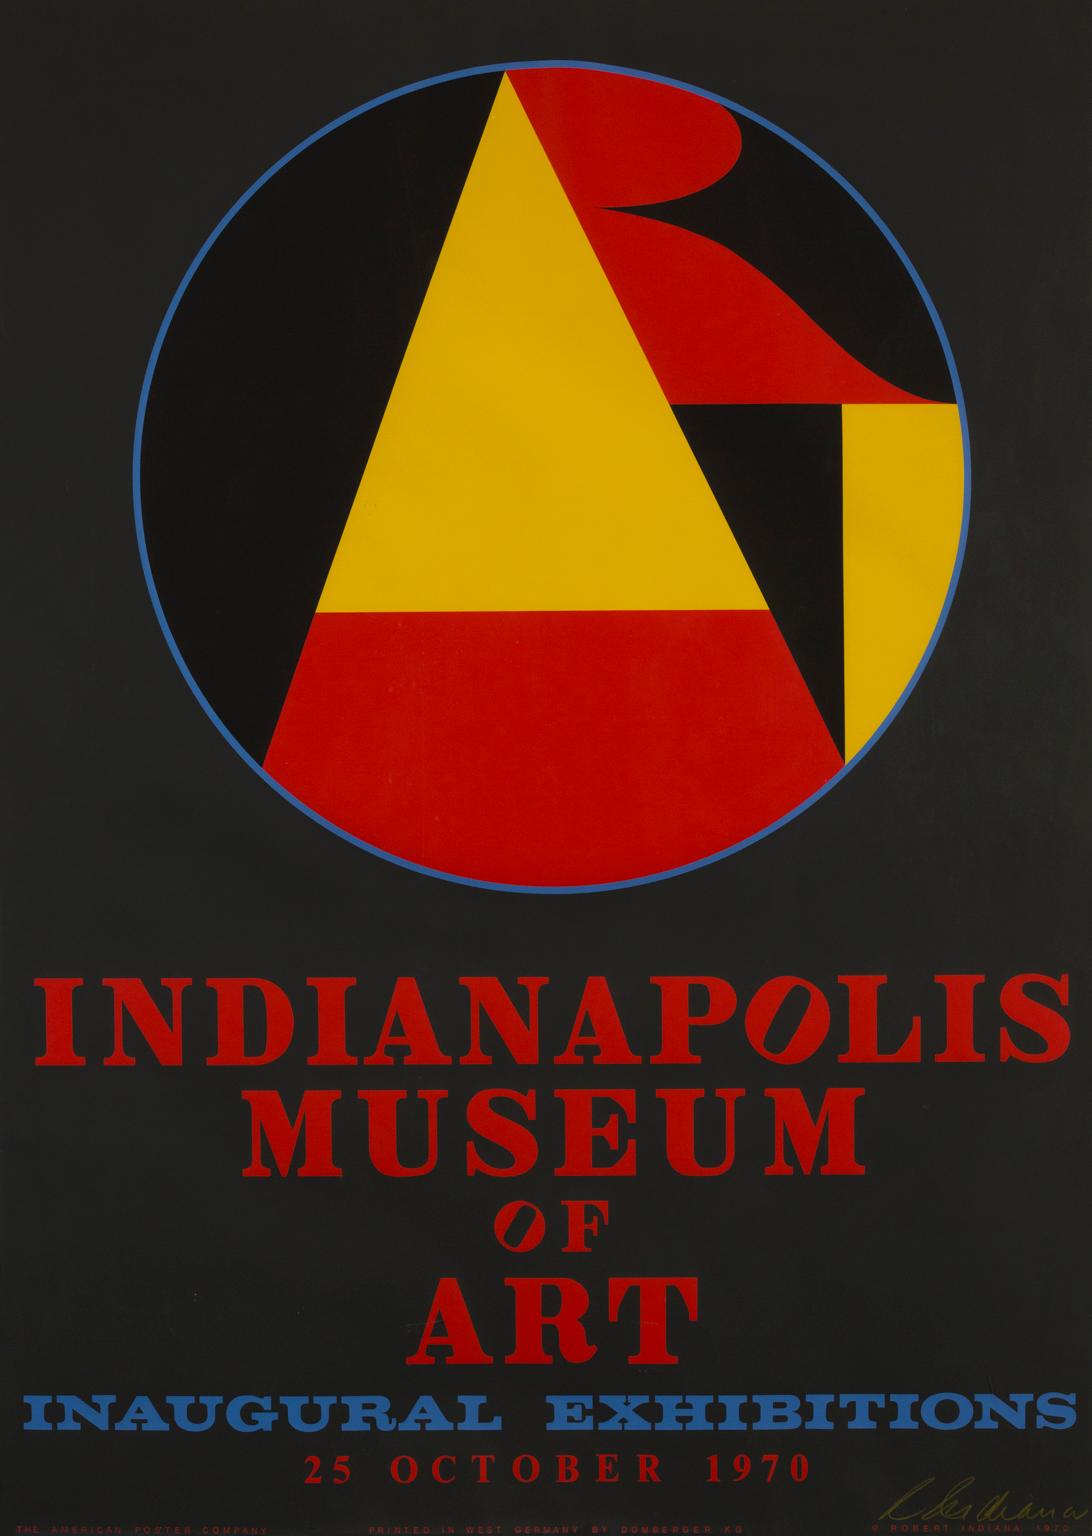 „Indianapolis Museum of Art Inaugural Exhibitions“, Farb-Seidendruck, signiert – Print von Robert Indiana